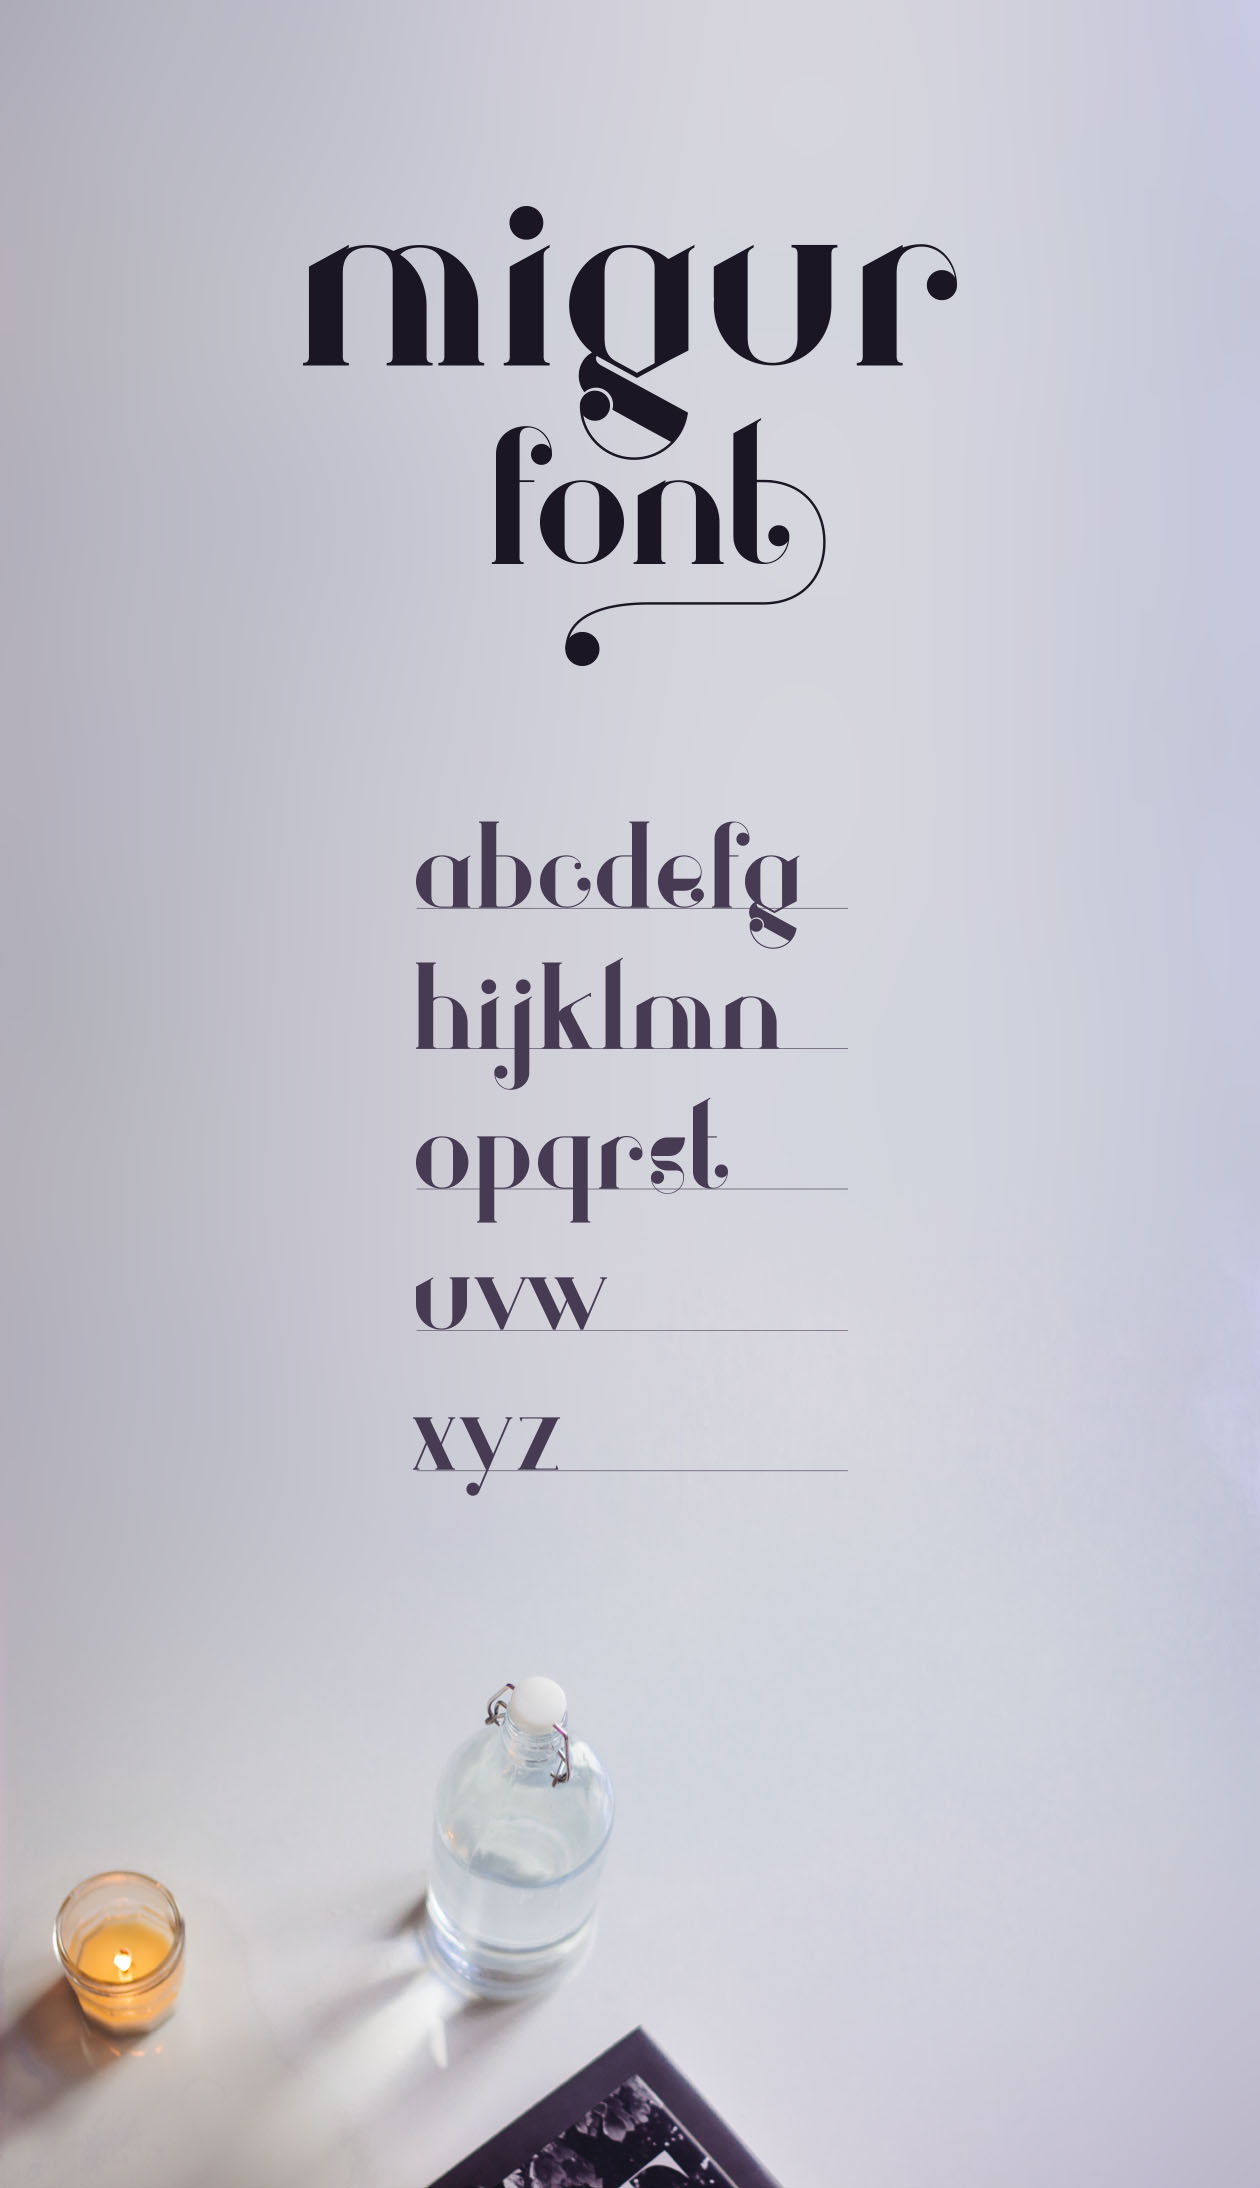 Behance网站推荐最佳英文排版印刷字体16图库精选之一 Migur Serif Font插图(1)